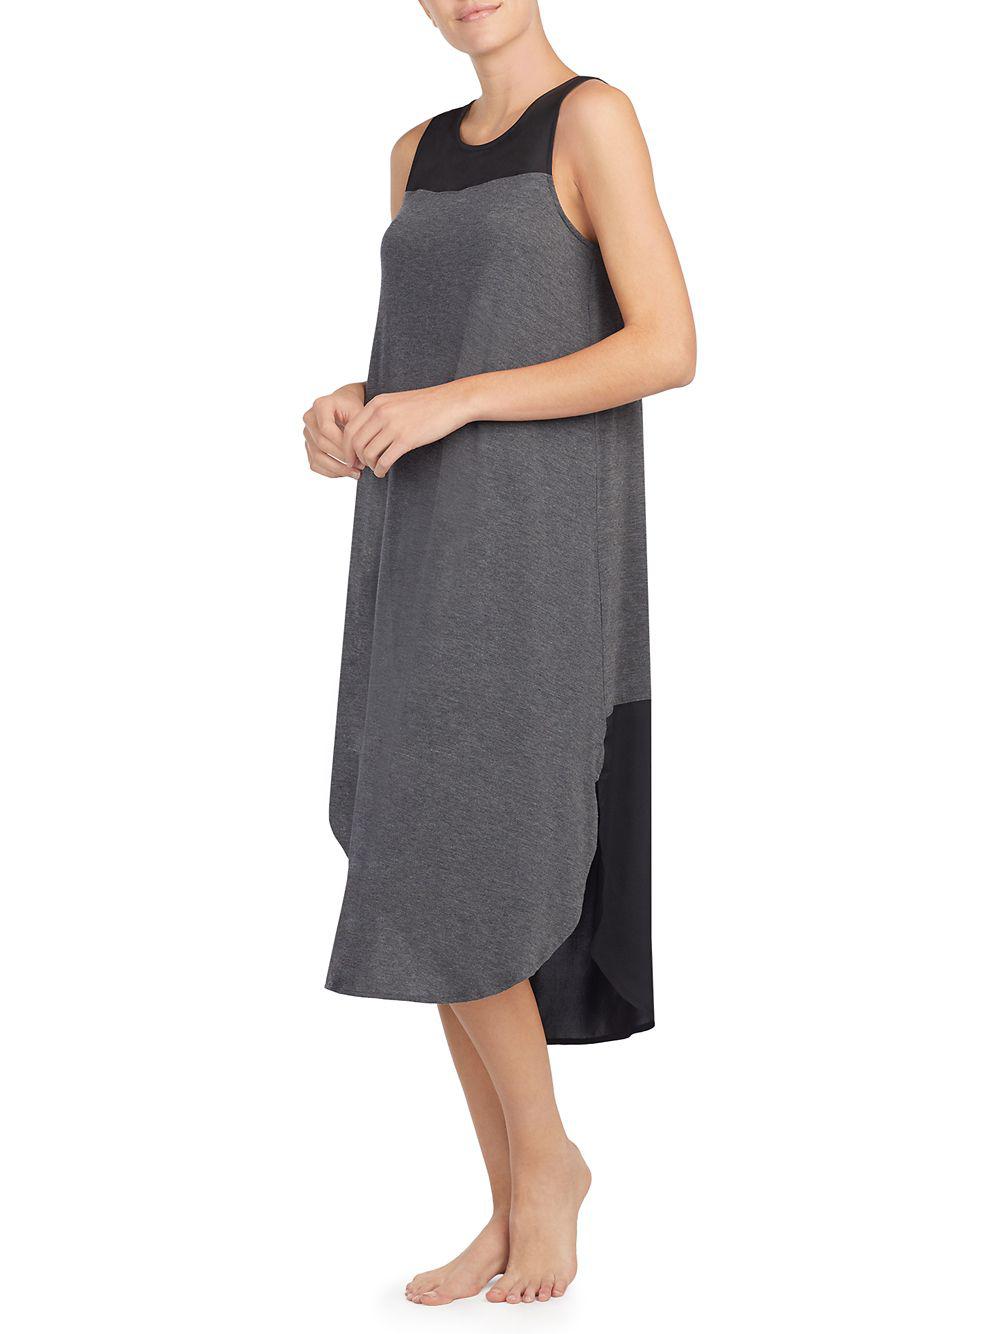 DKNY Sleeveless Nightgown in Gray - Lyst